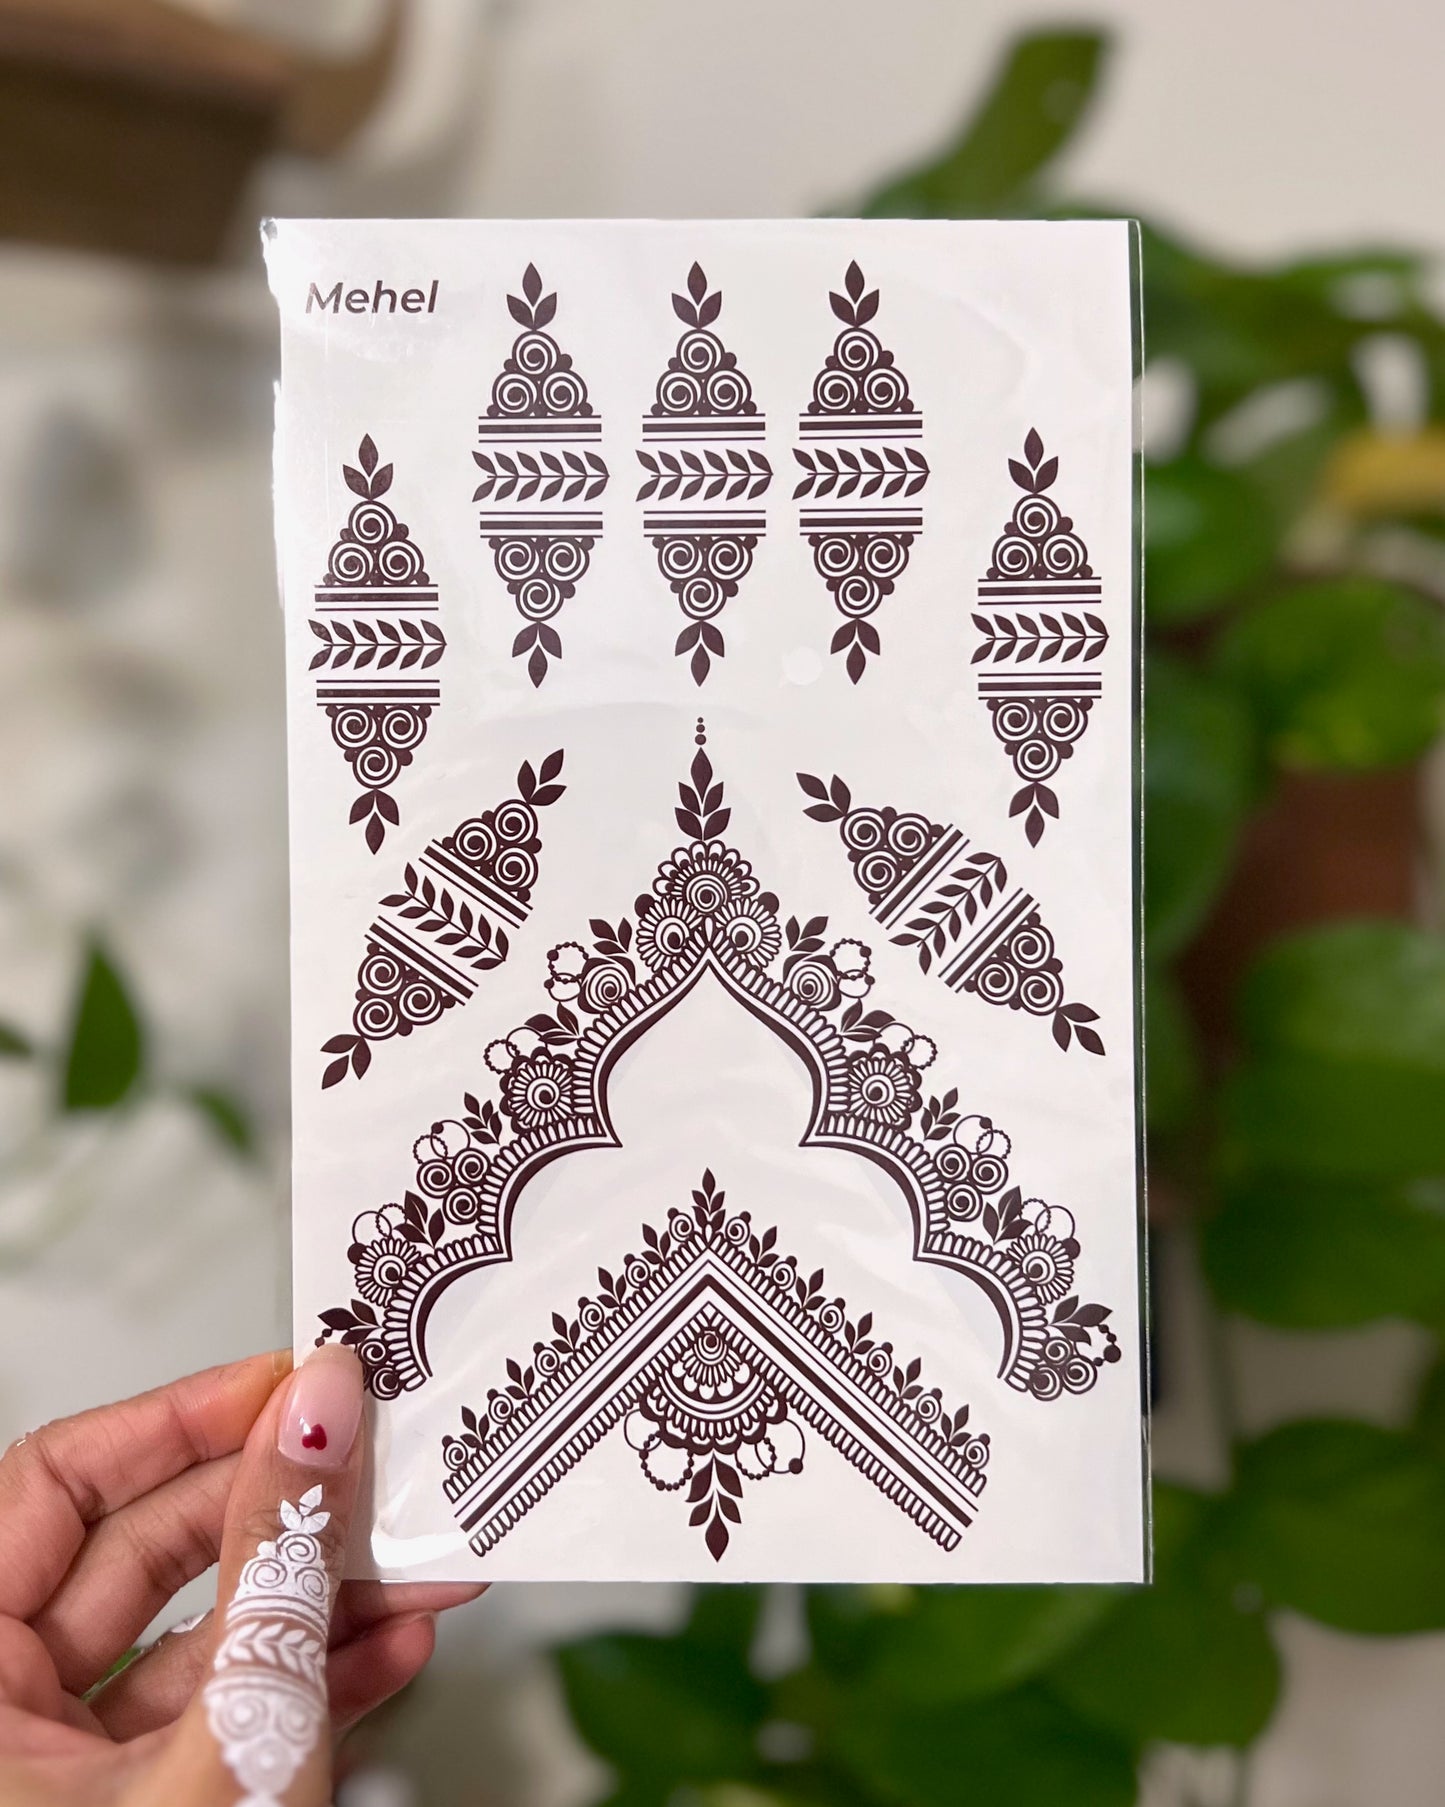 Mehel - Dome Shaped Instant Henna Tattoo (Design 25)